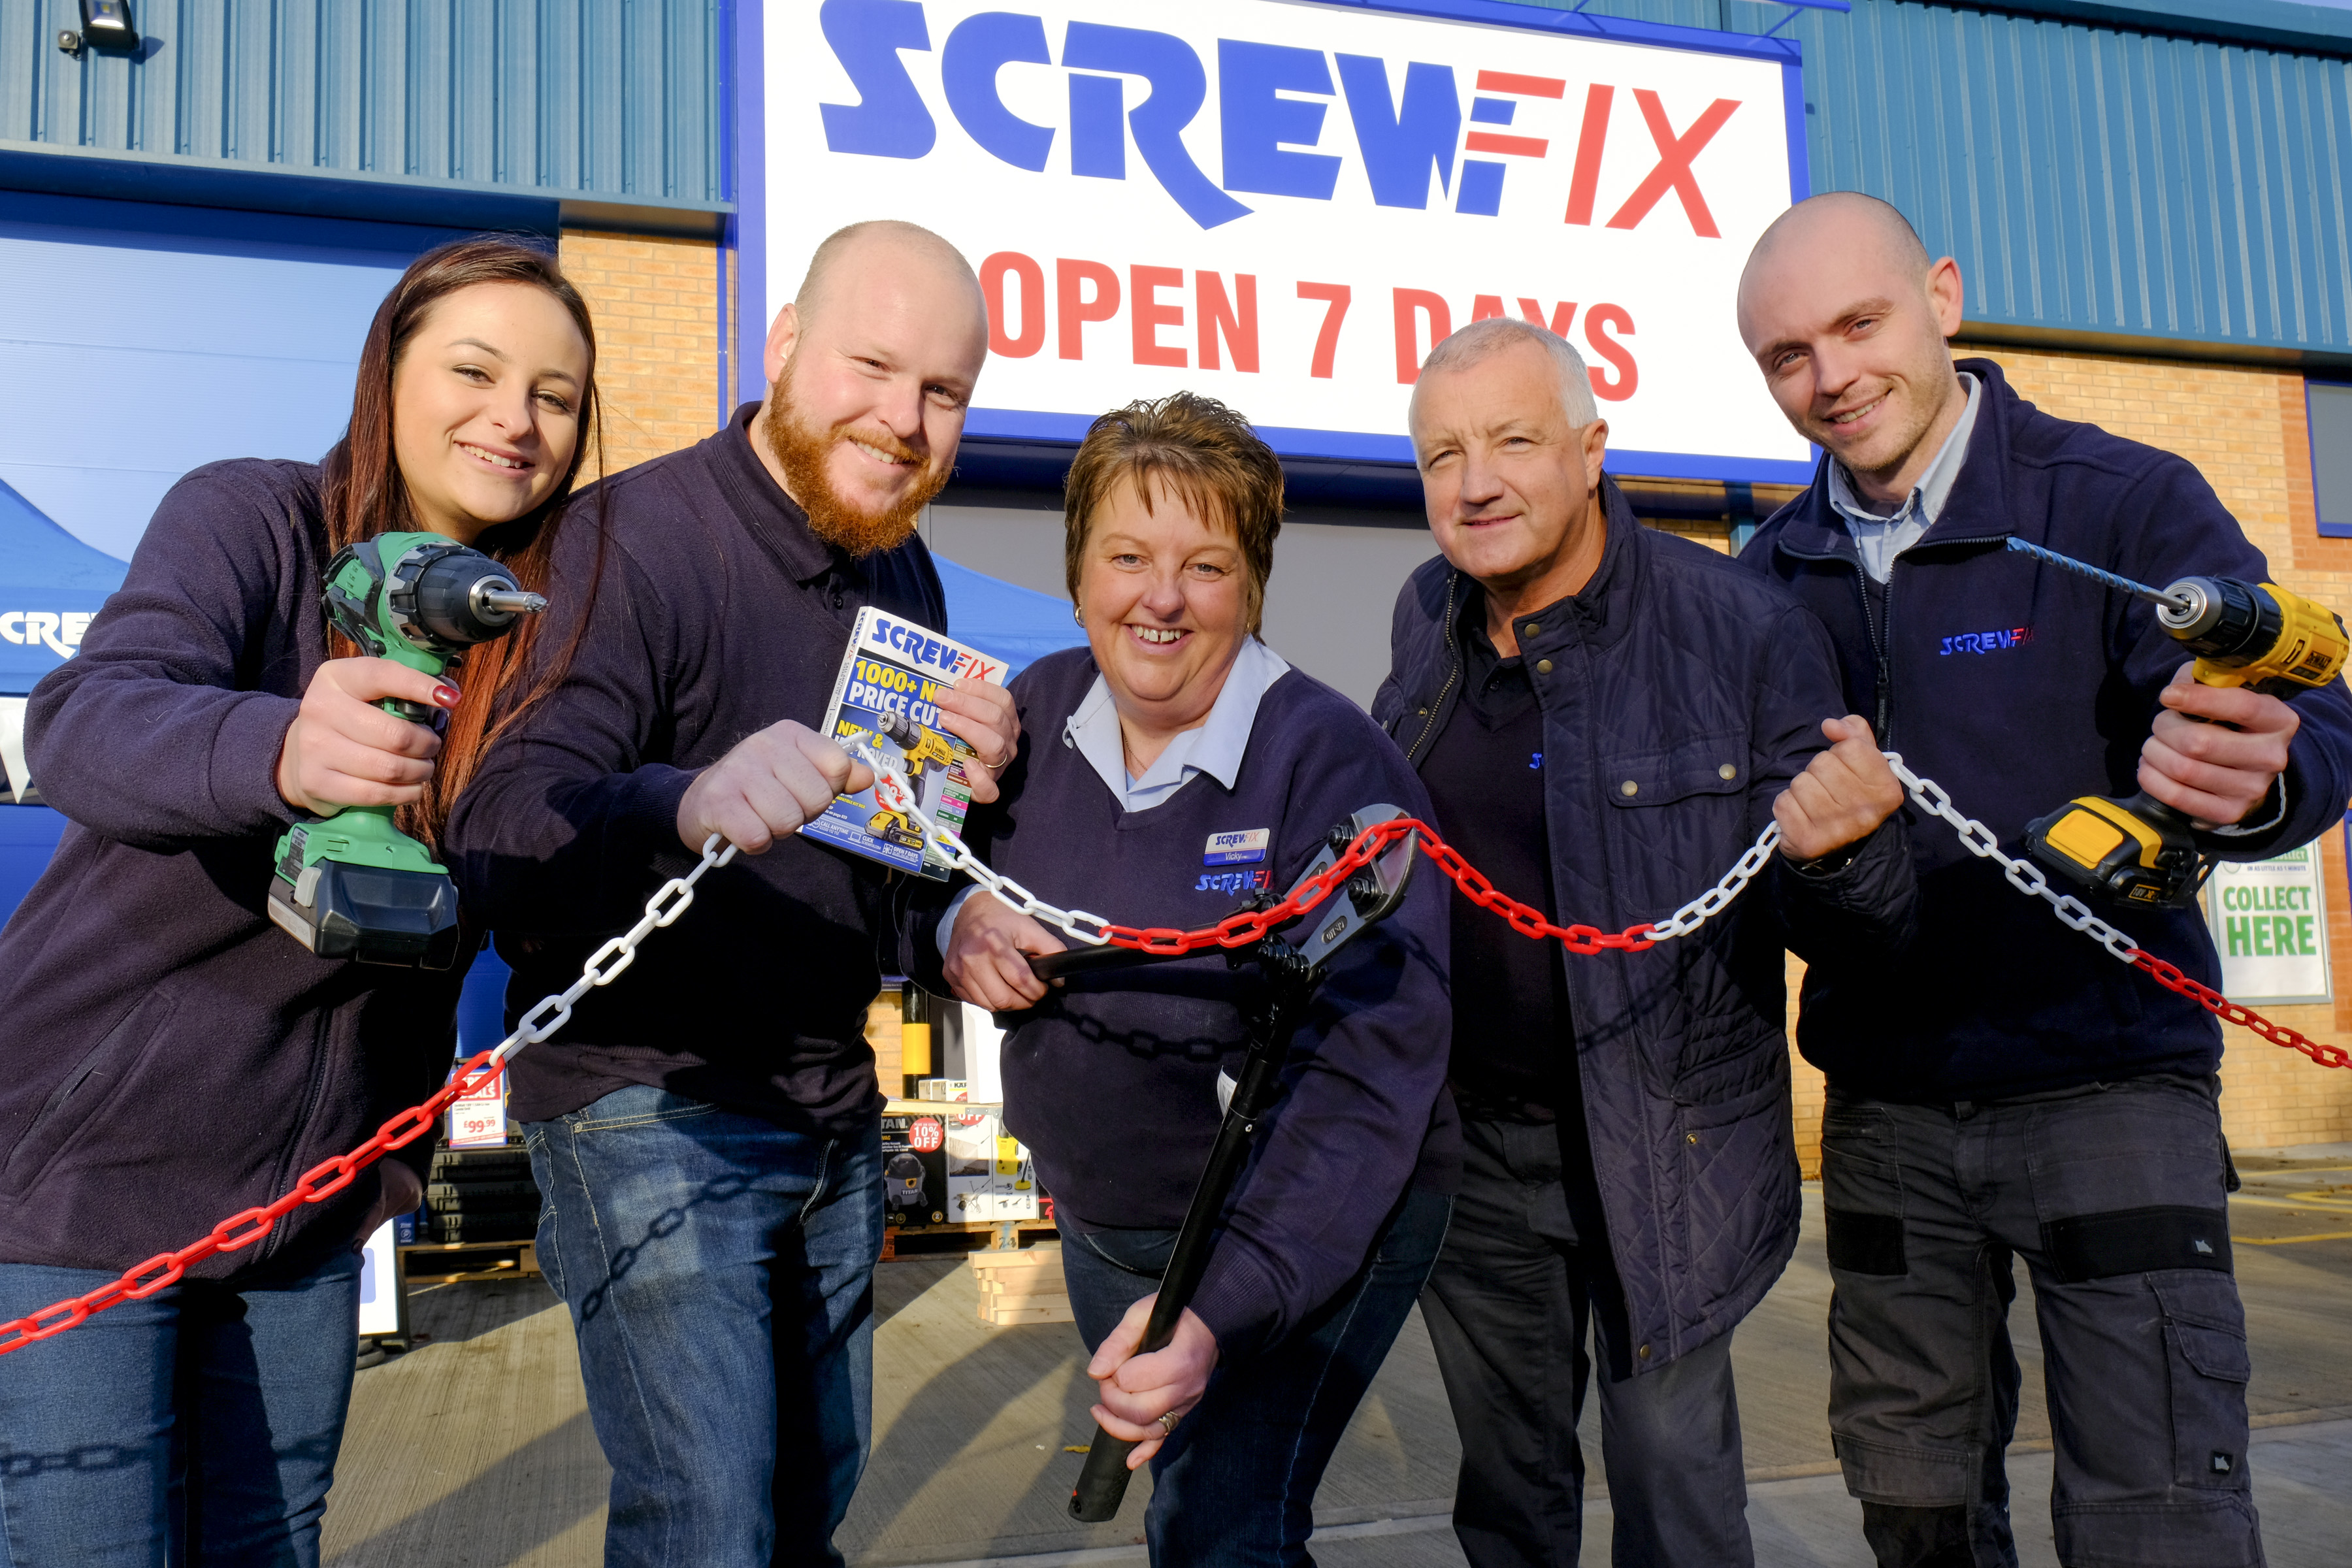 Leeds’ third Screwfix store is declared a runaway success